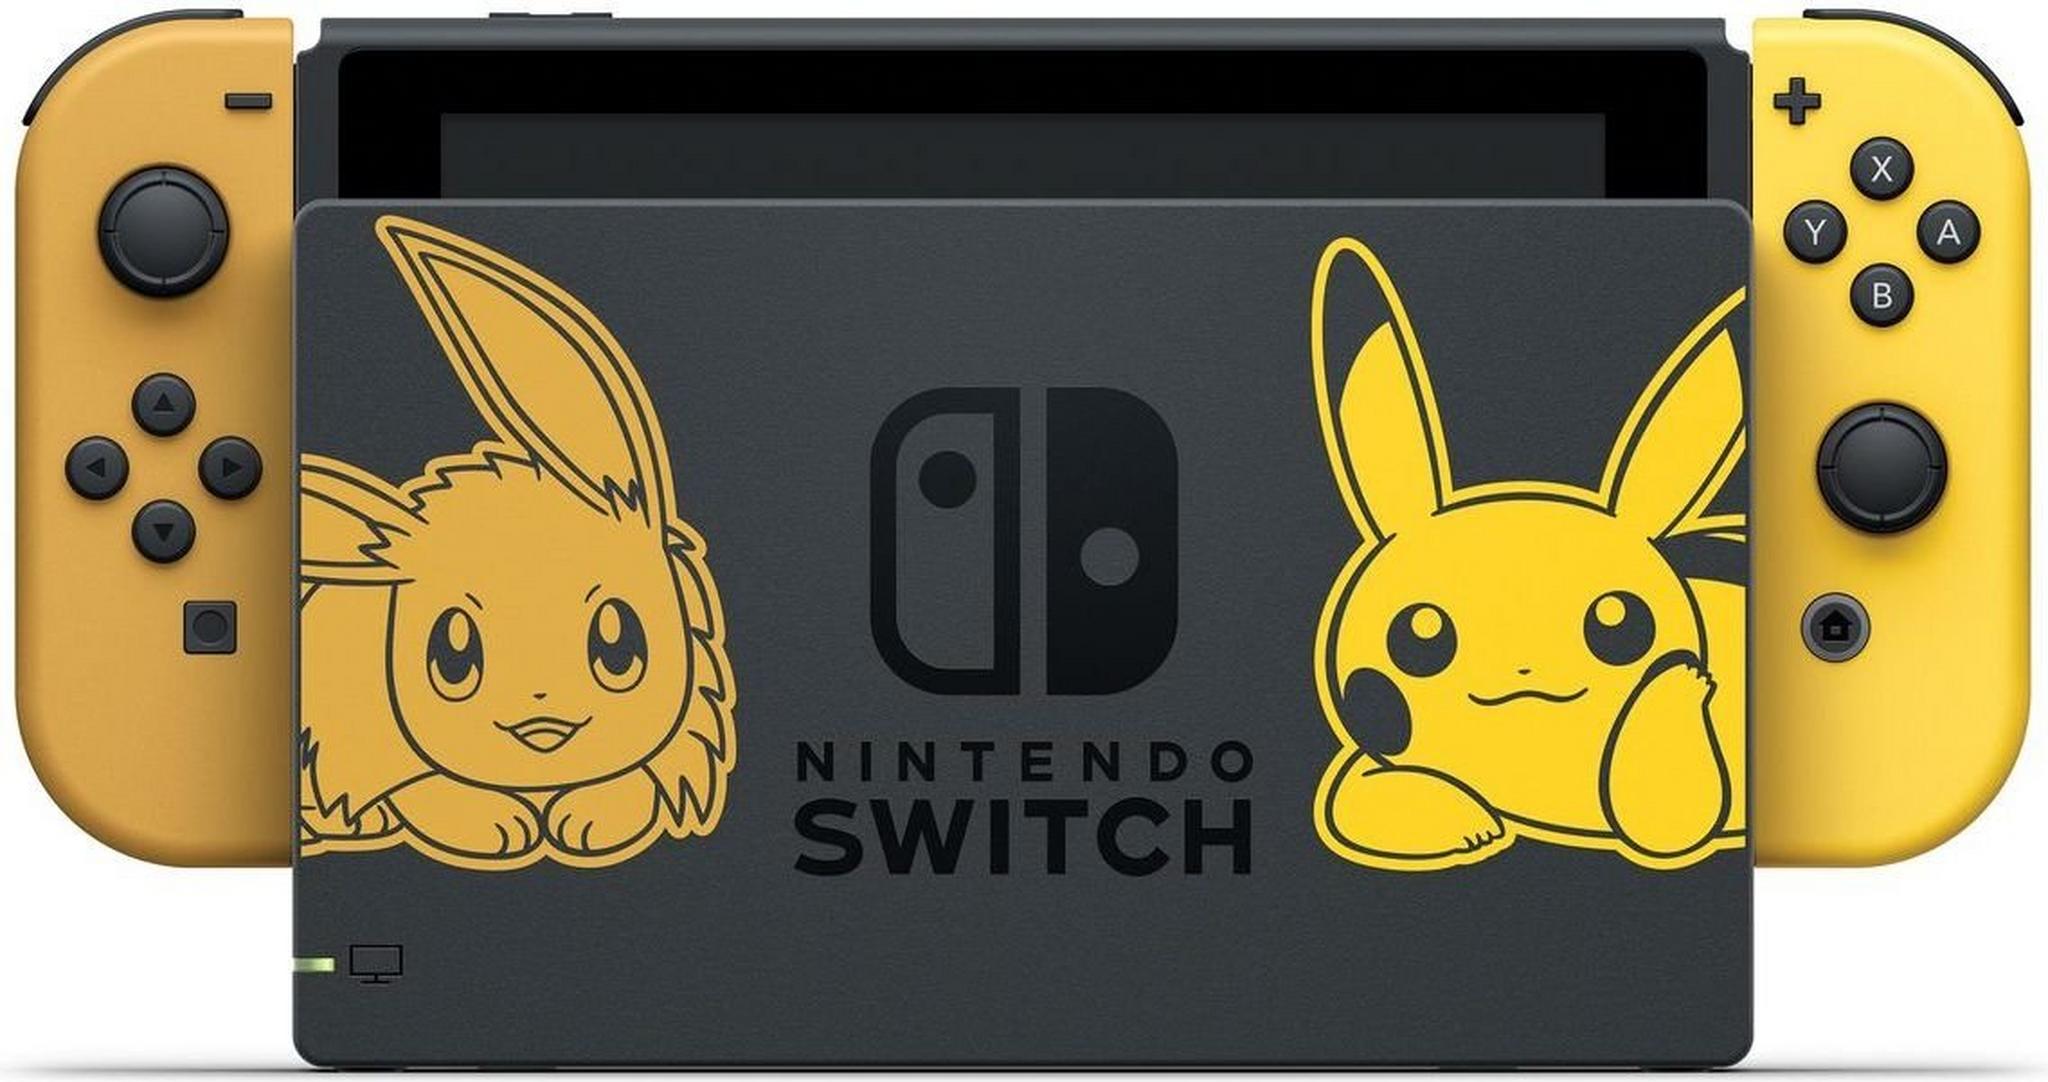 Nintendo Switch Let's Go Pikachu Limited Edition Console Bundle